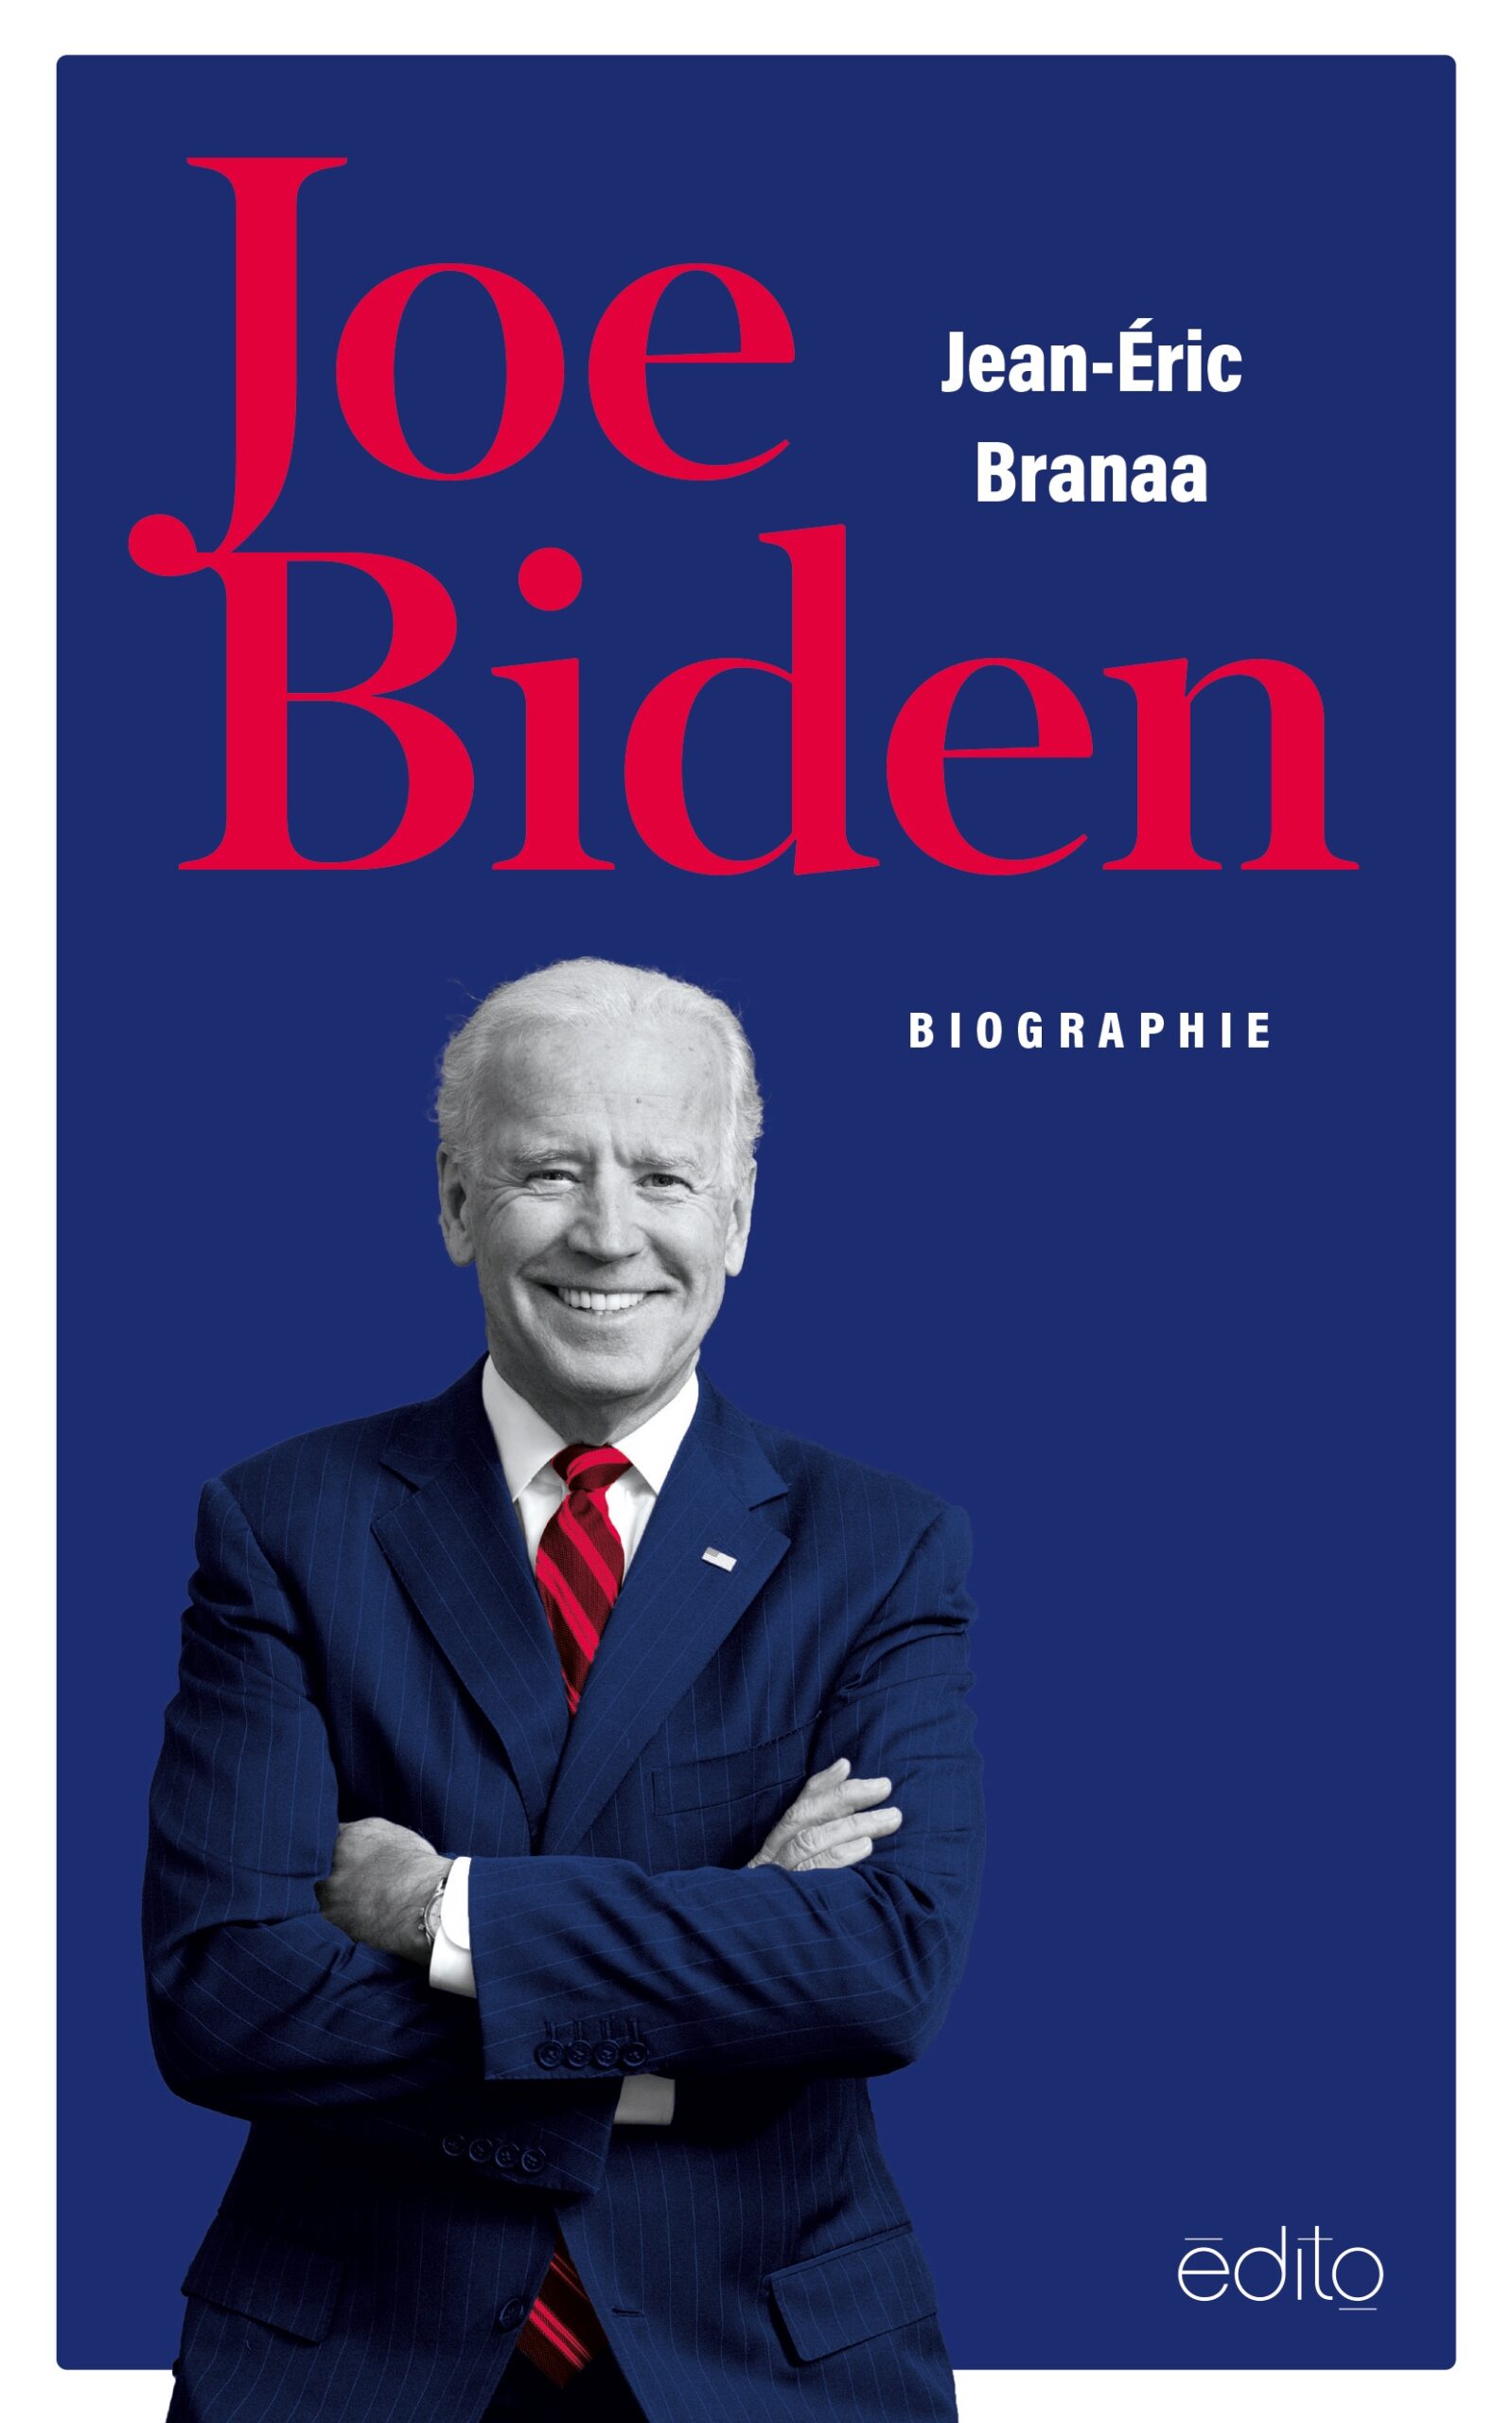 Joe Biden main image